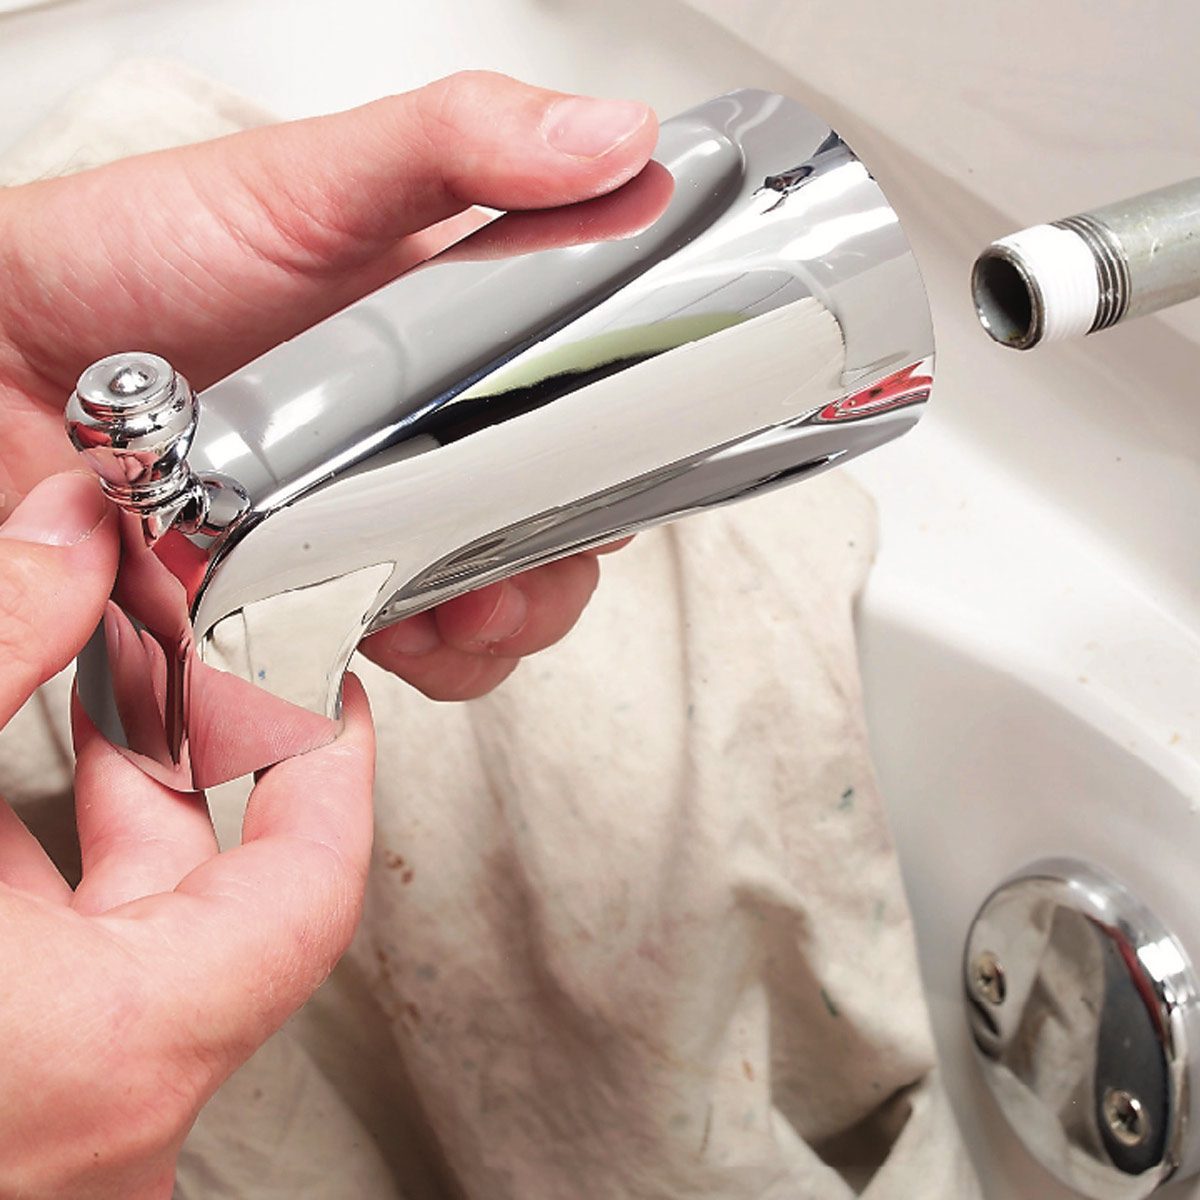 How to Replace a Bathtub Spout | Family Handyman